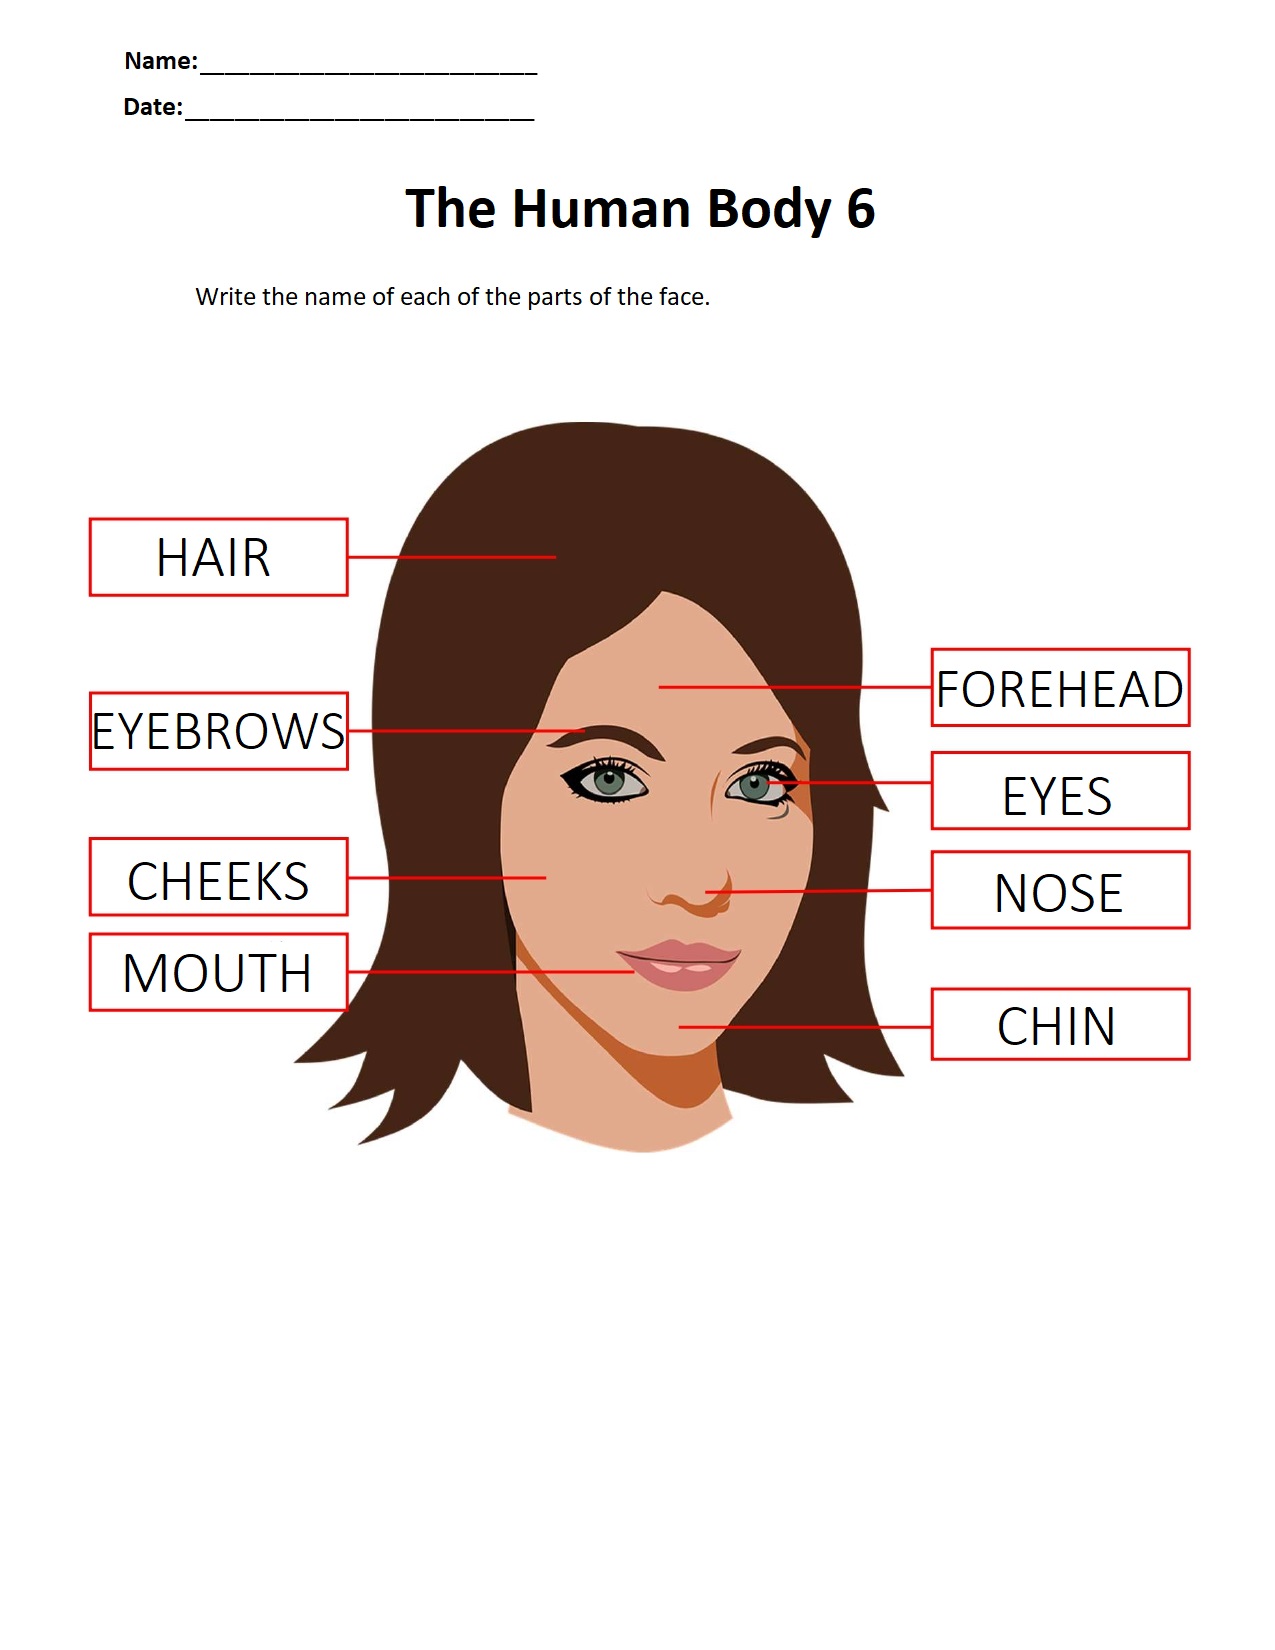 The Human Body 6.jpg